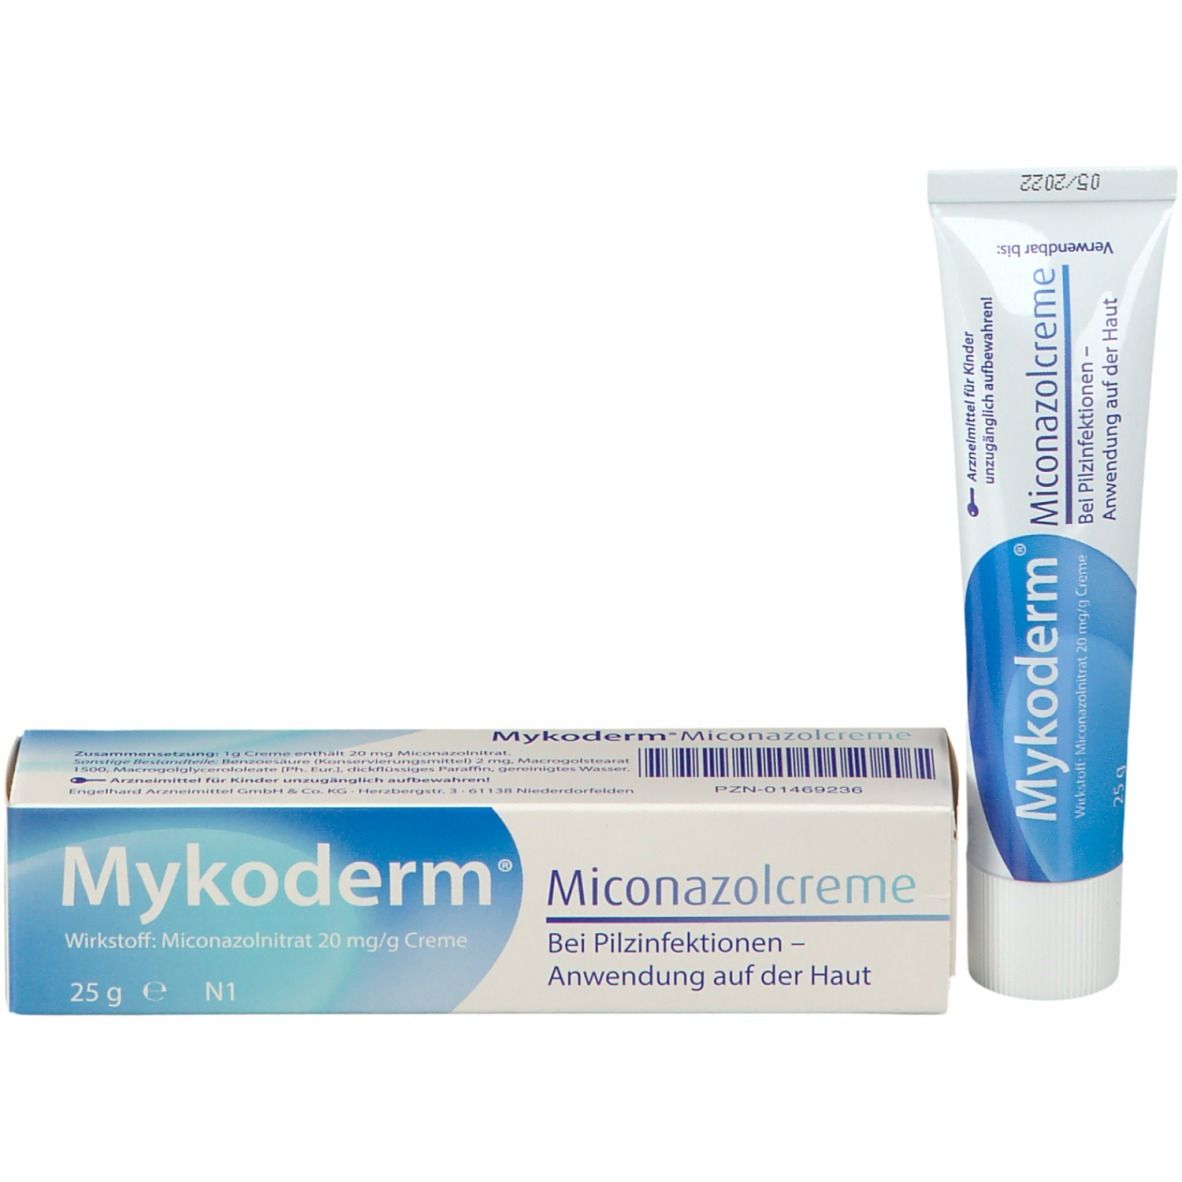 Mykoderm® Miconazolcreme